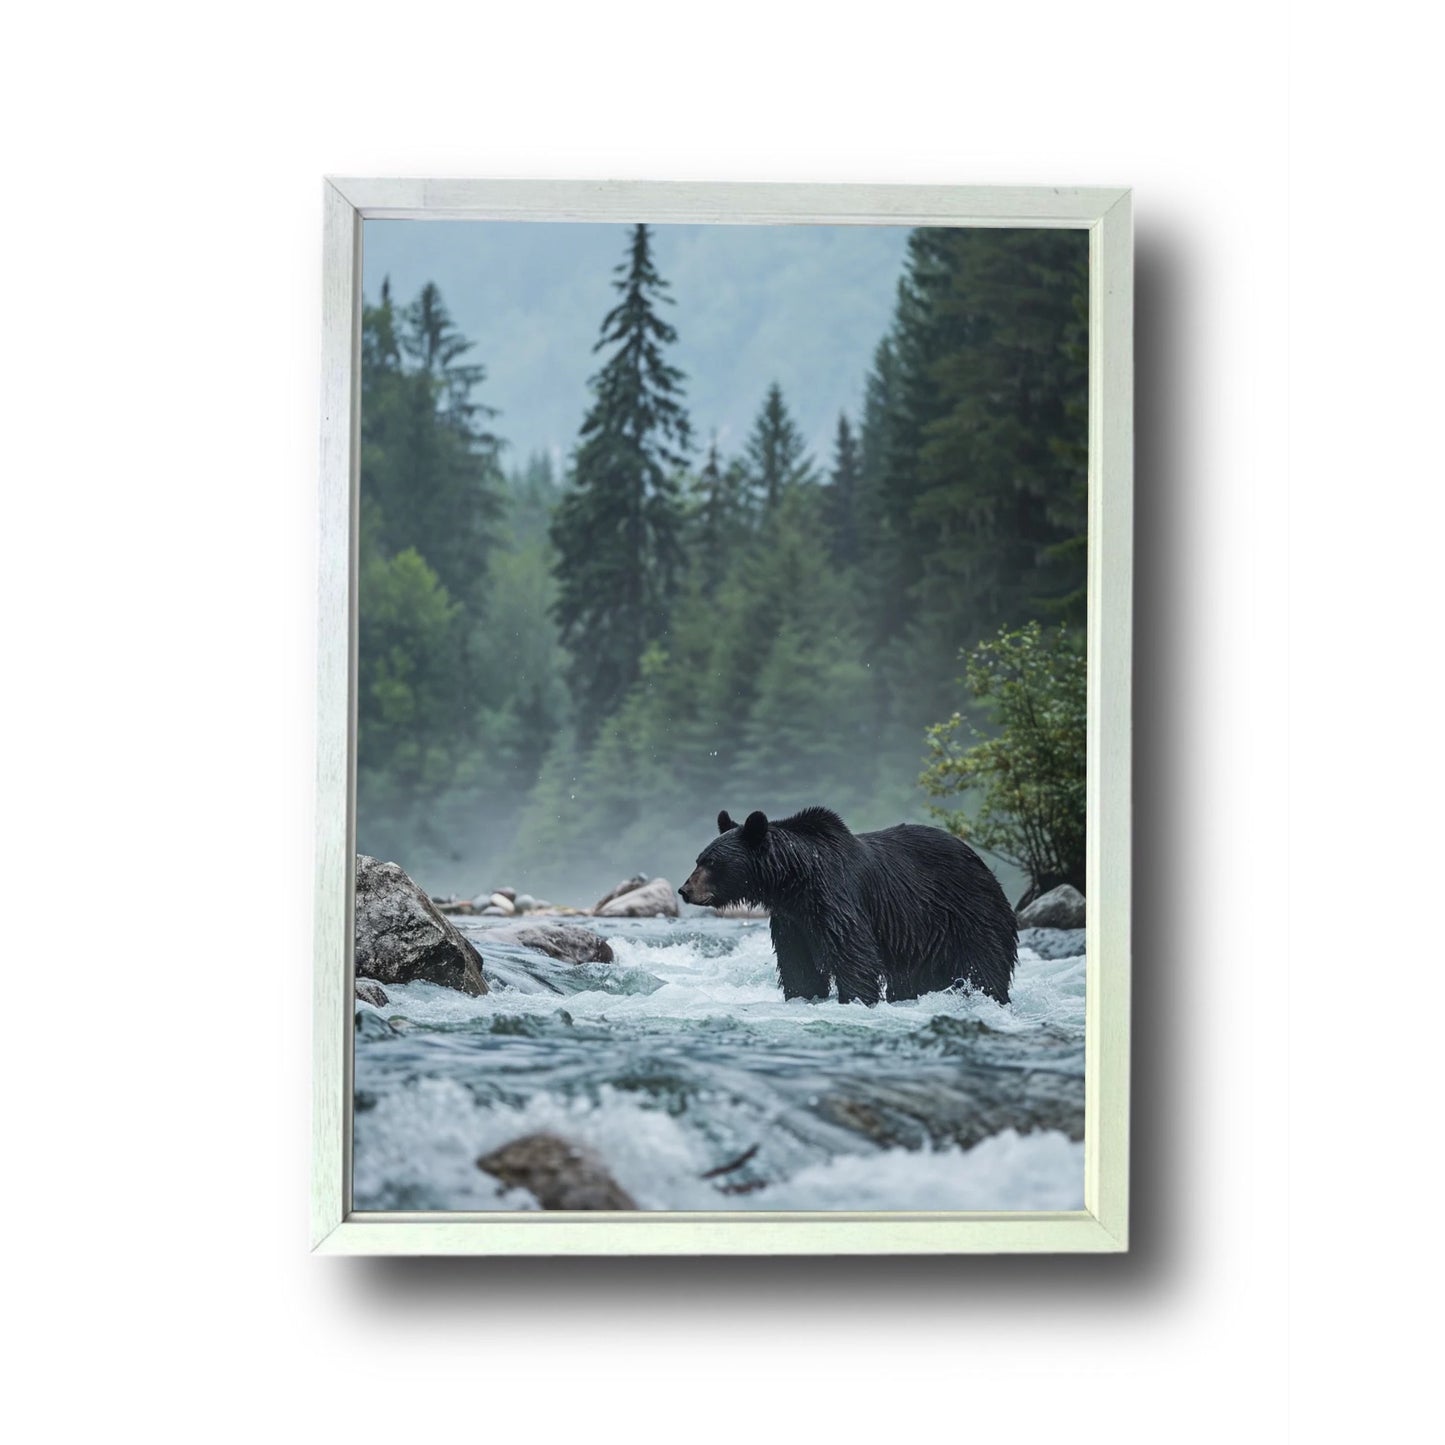 Black bear standing in river